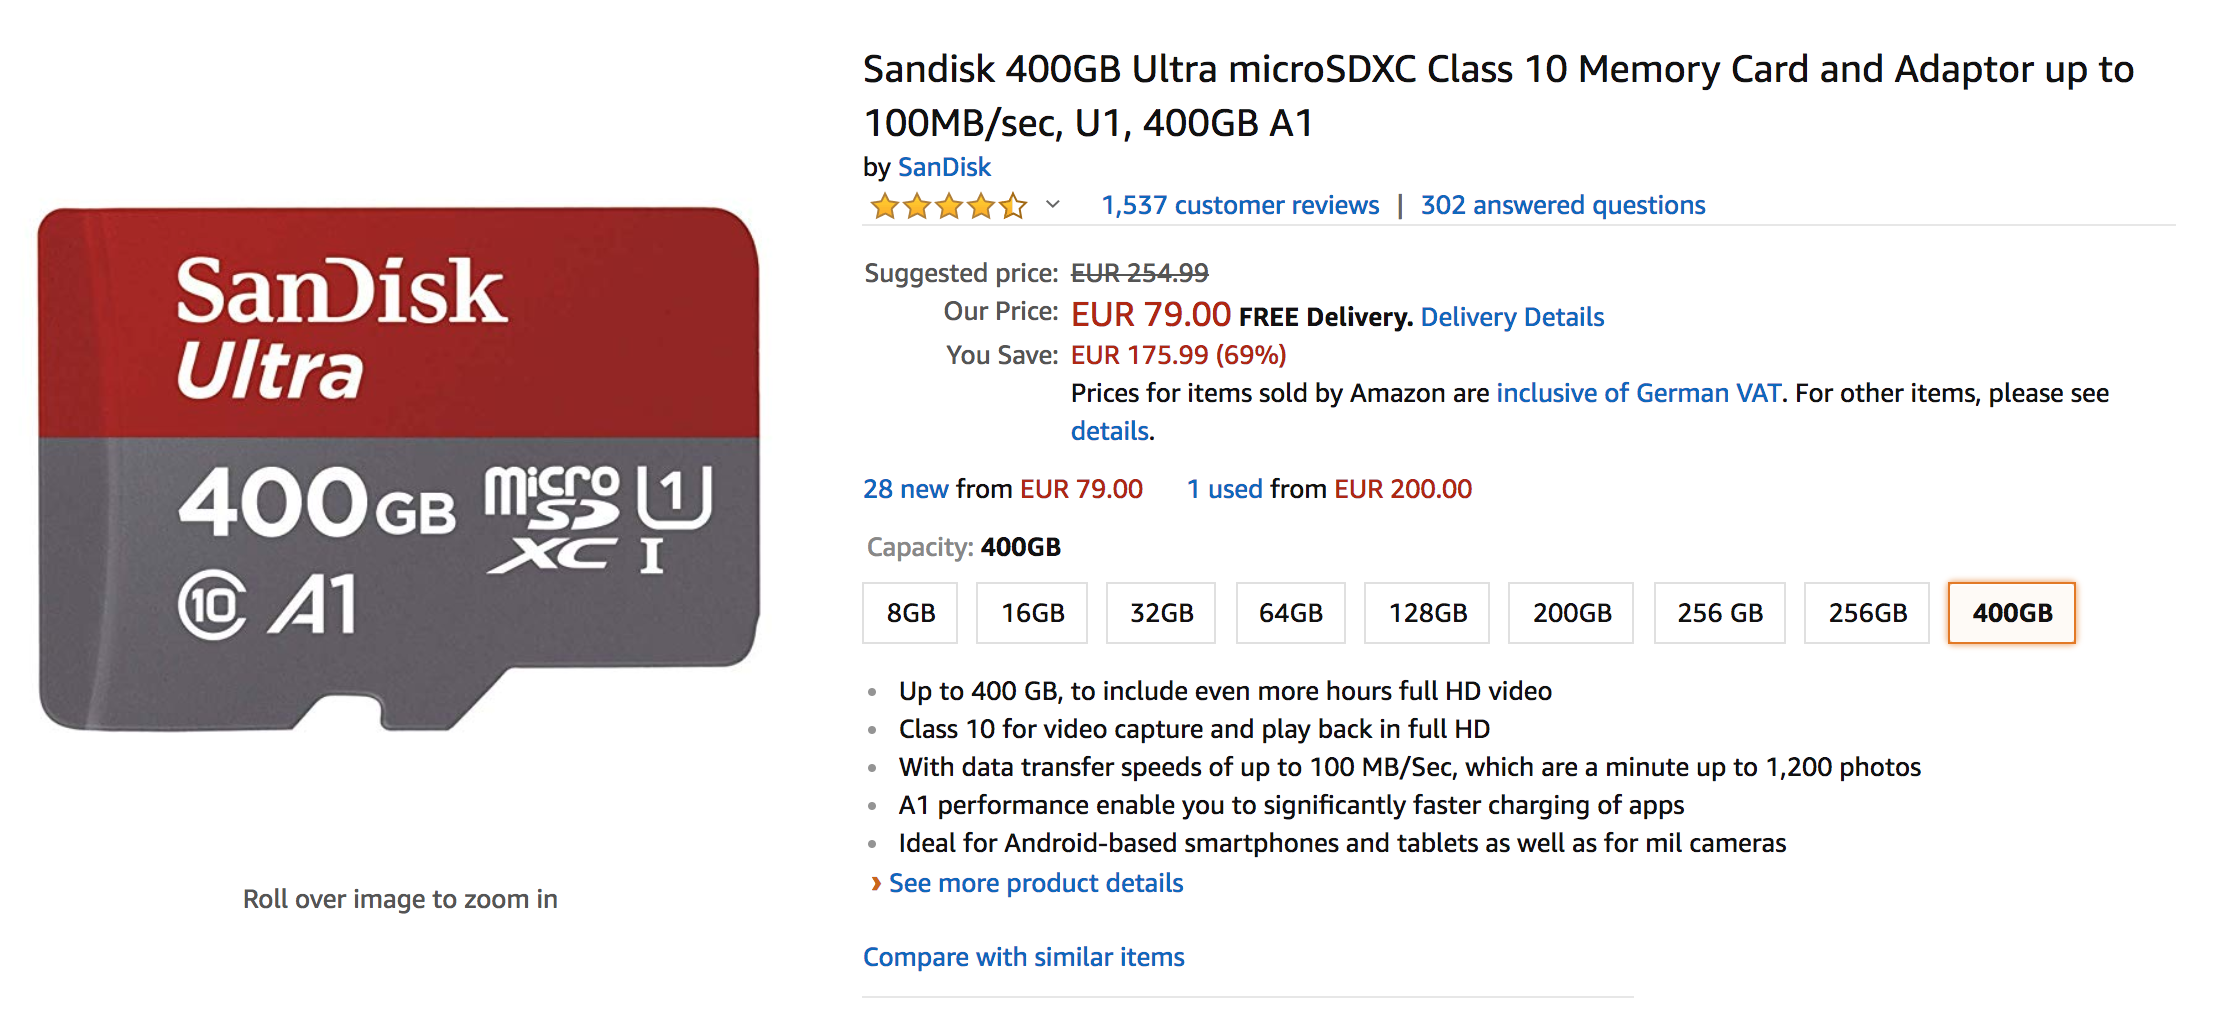 Sandisk 400GB Ultra microSDXC Class 10 Memory Card